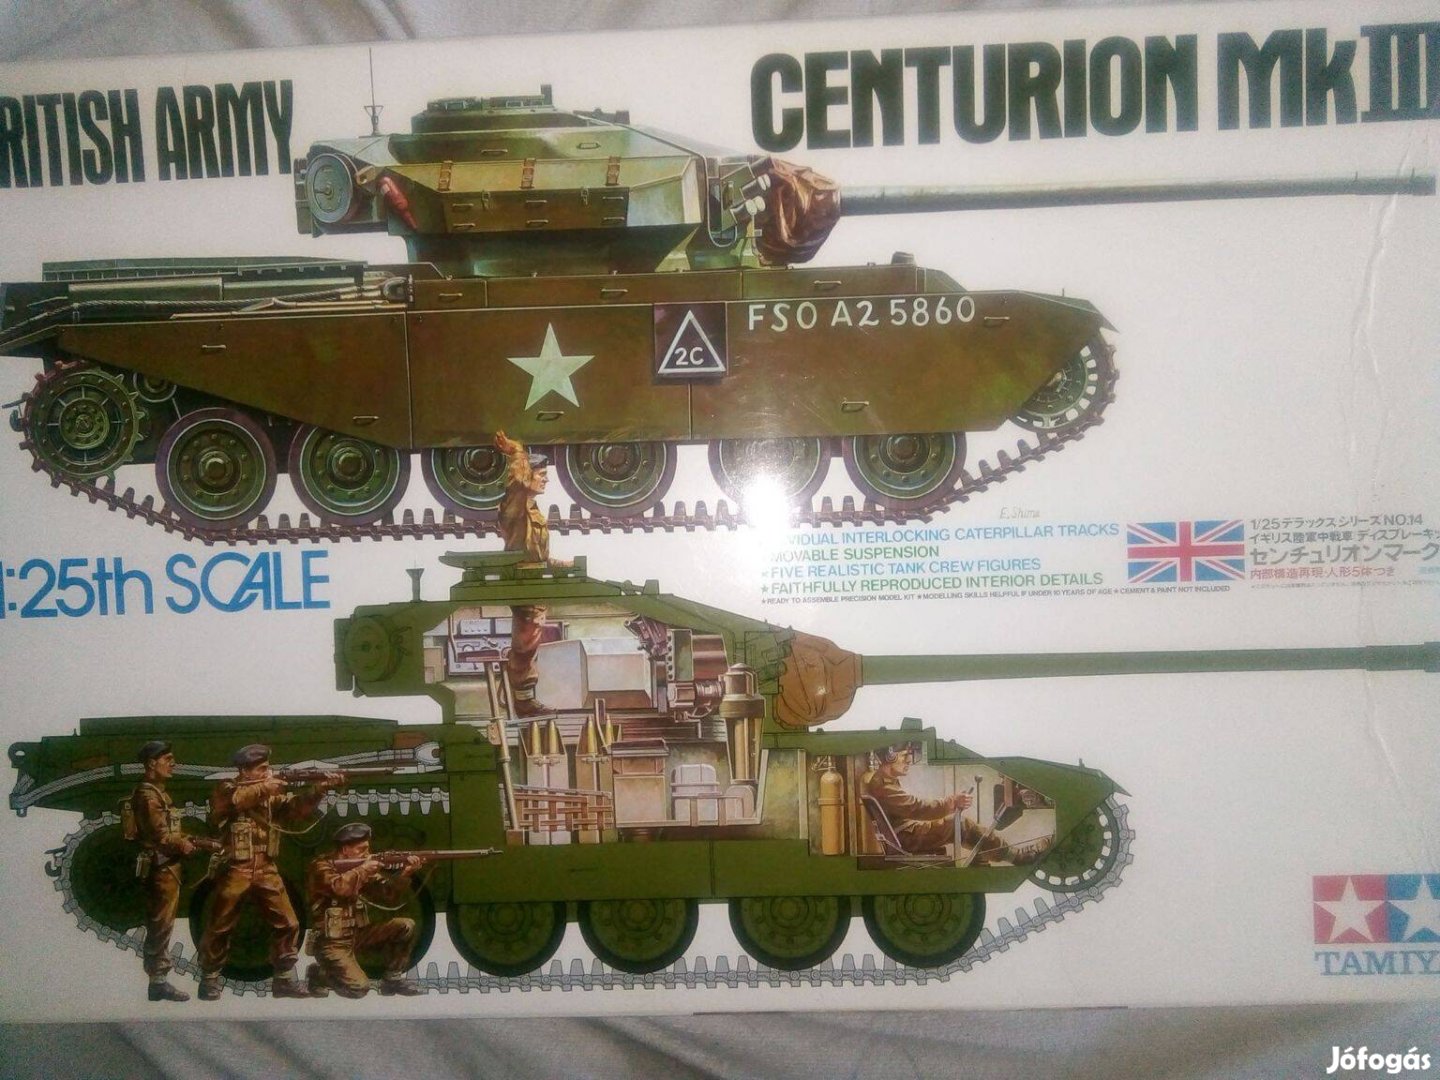 Tamiya British Army Centurion Mk III makett